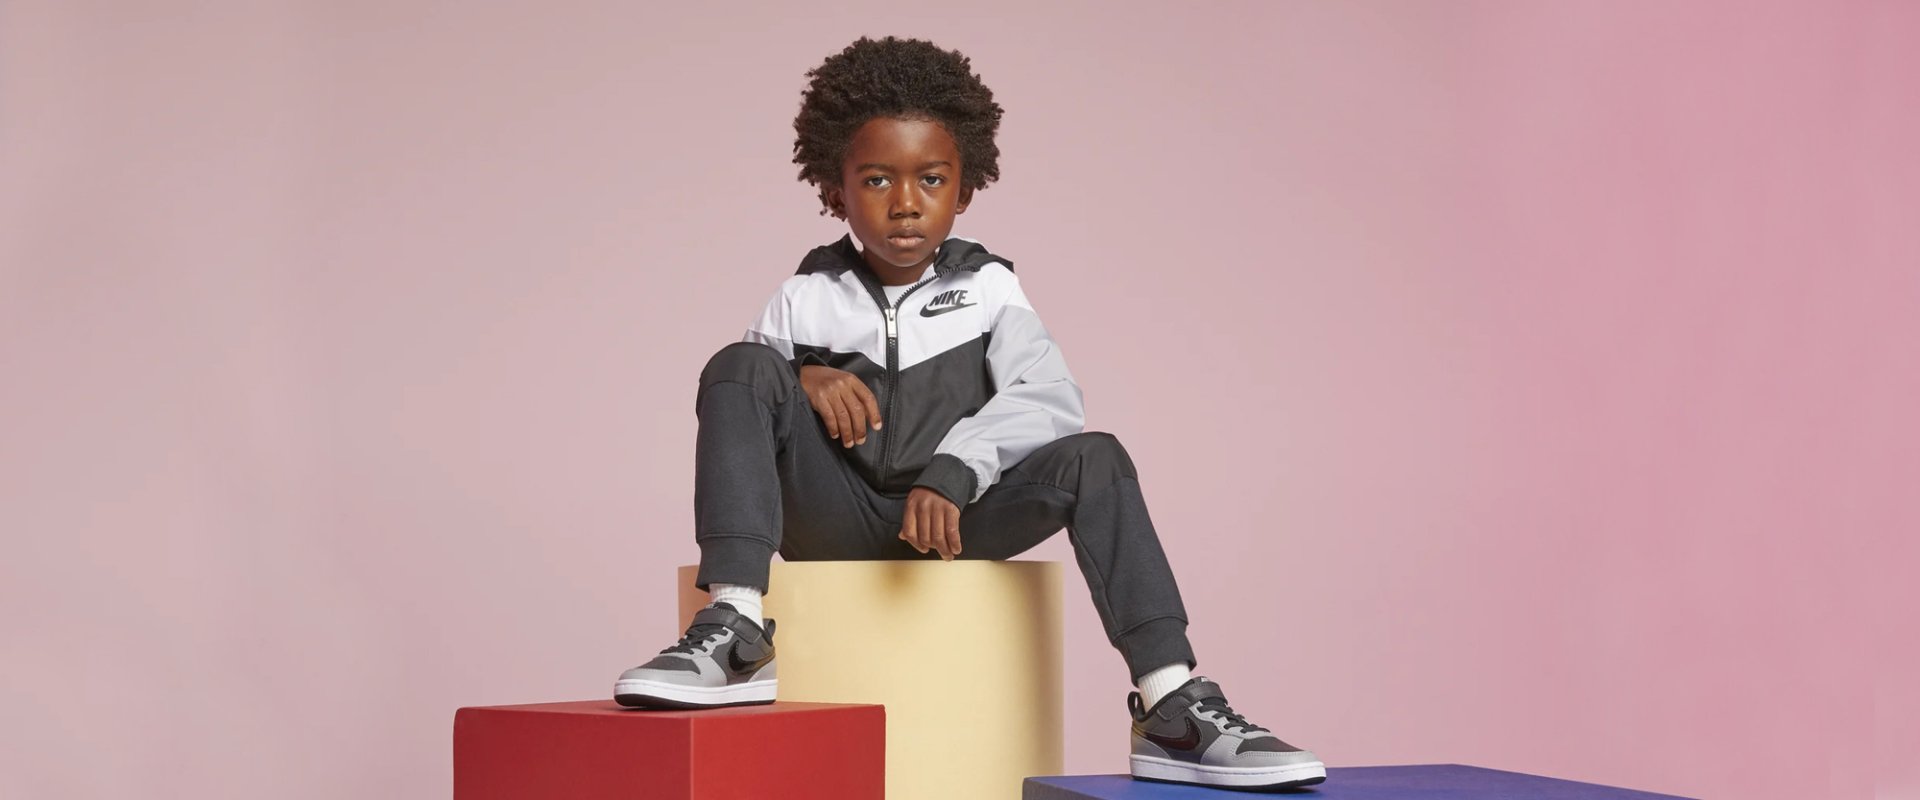 Nike Детям - MEGASPORT